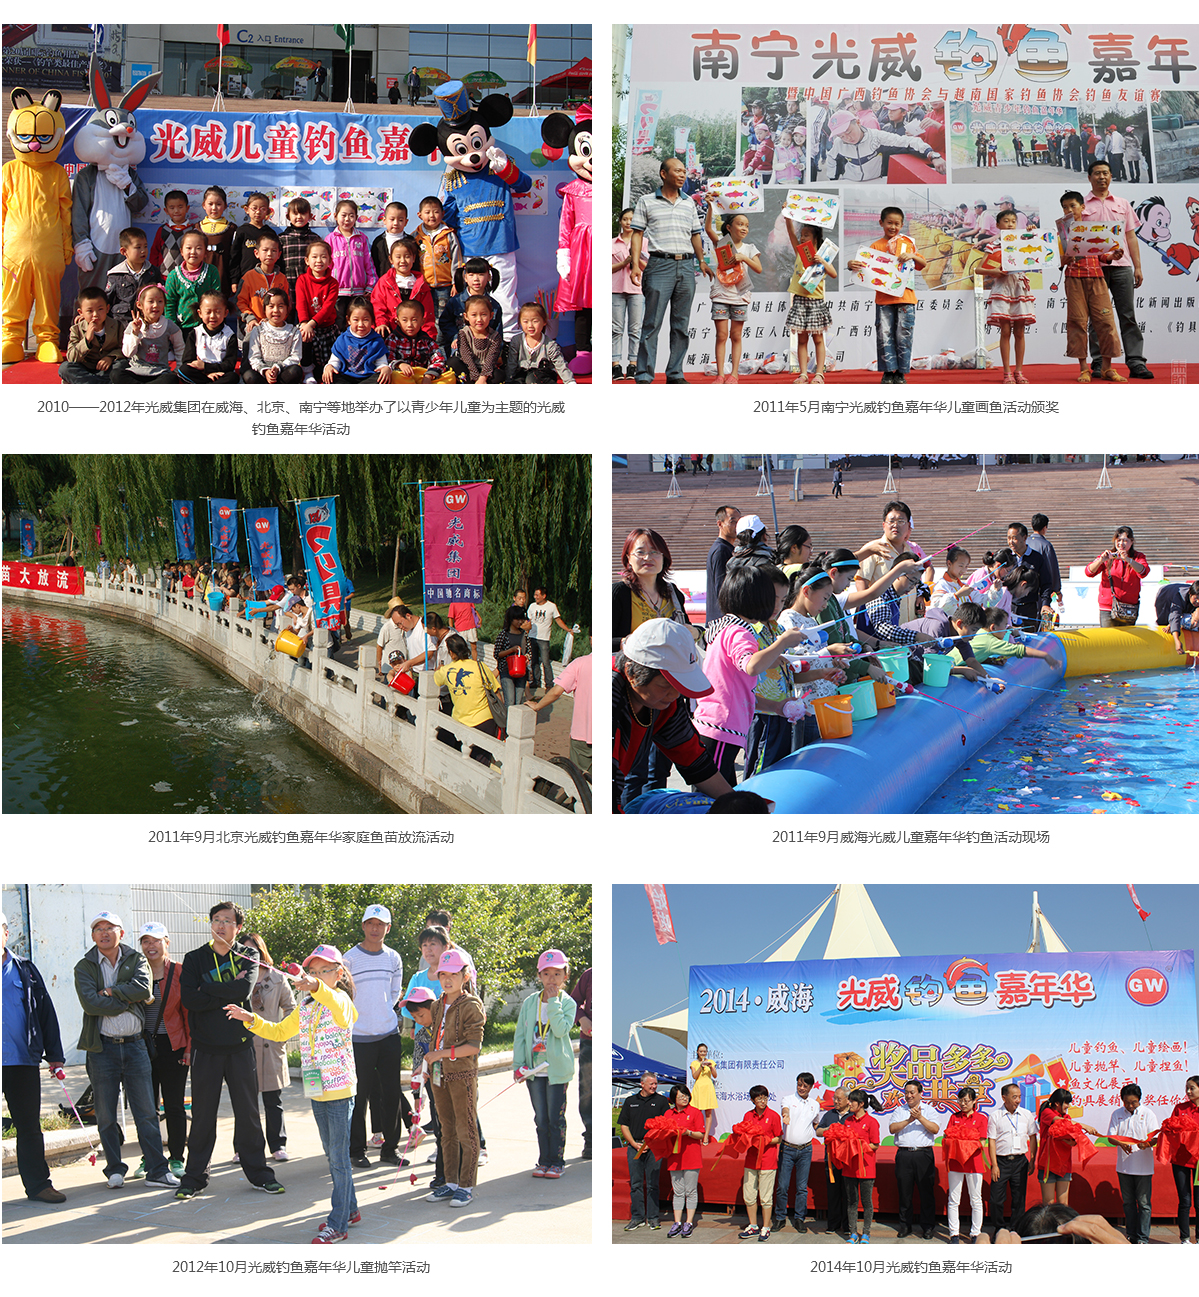 Guangwei Fishing Carnival has been held since 2010